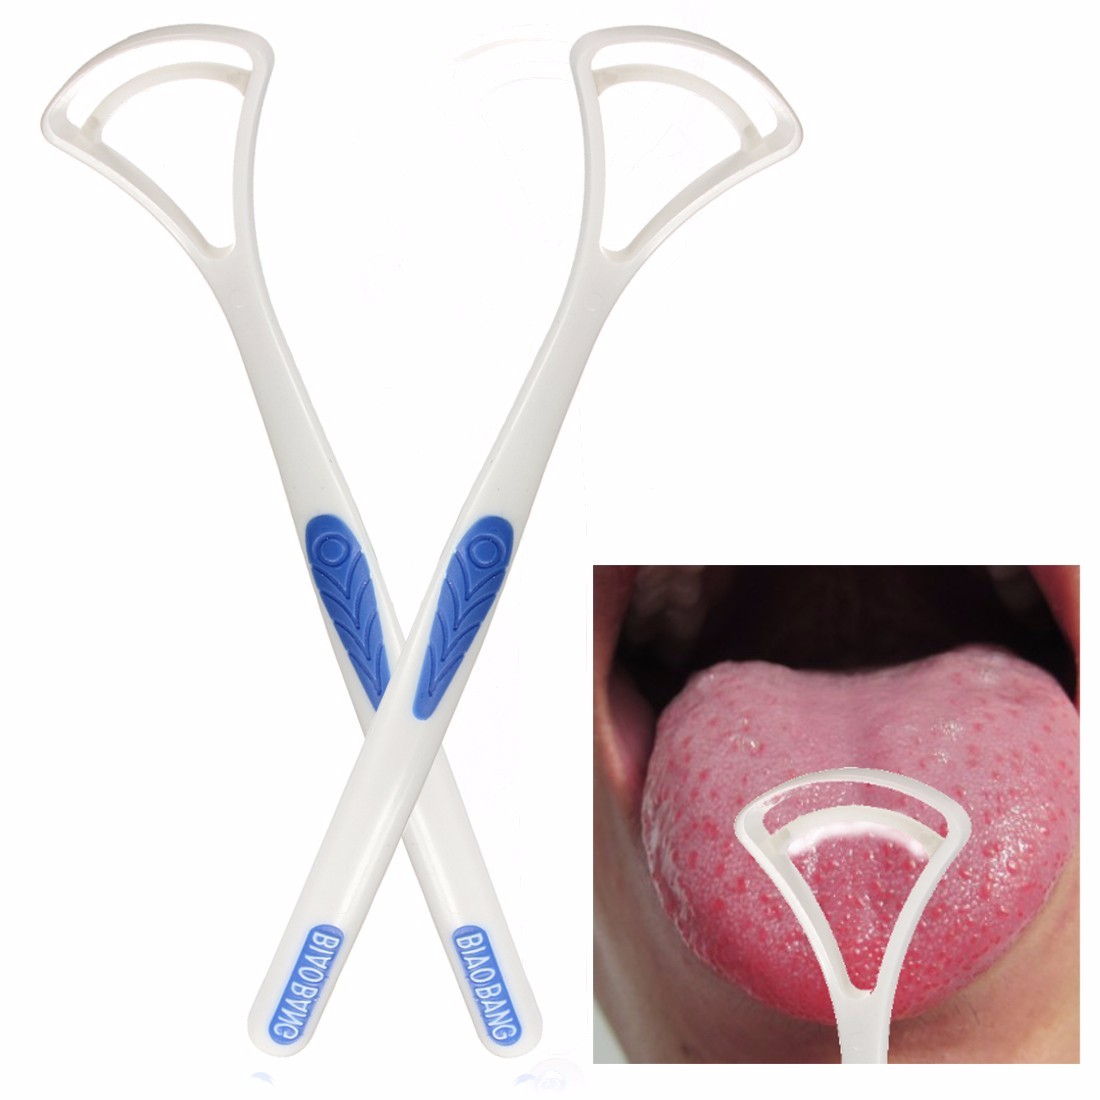 

1pcs Tongue Cleaner Scraper Fresh Breath Mouth Hygiene Oral Care